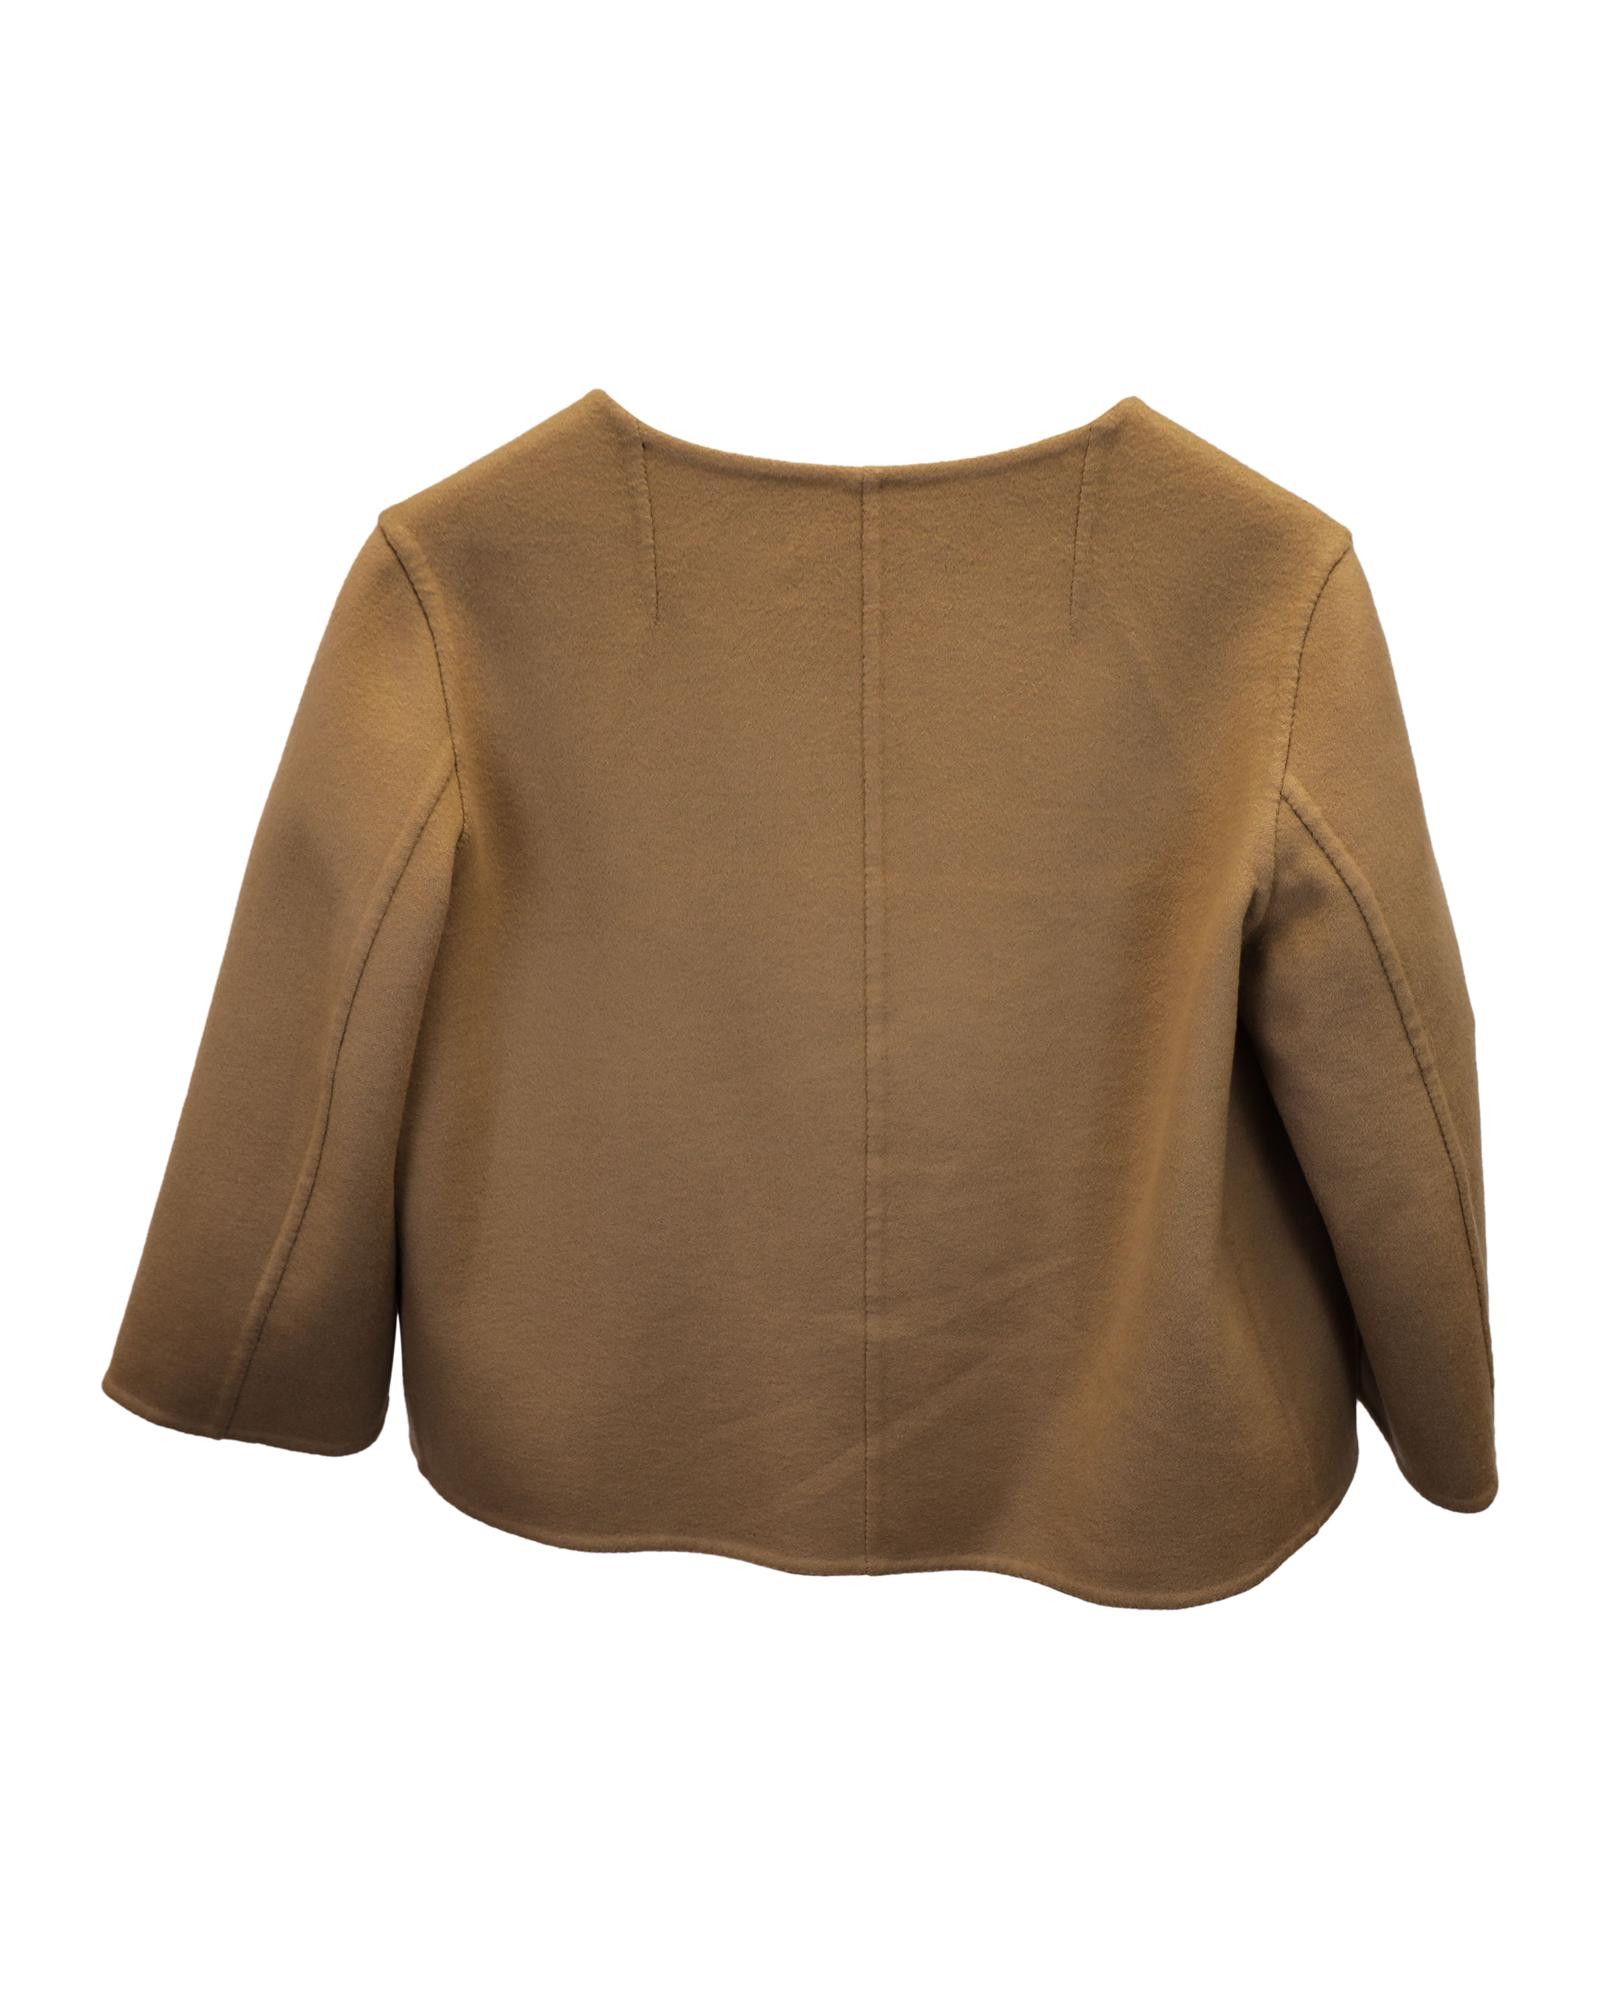 Yves Saint Laurent Luxurious Brown Cashmere Cropped Jacket by Saint Laurent Size S / US 4 / IT 40 - 2 Preview